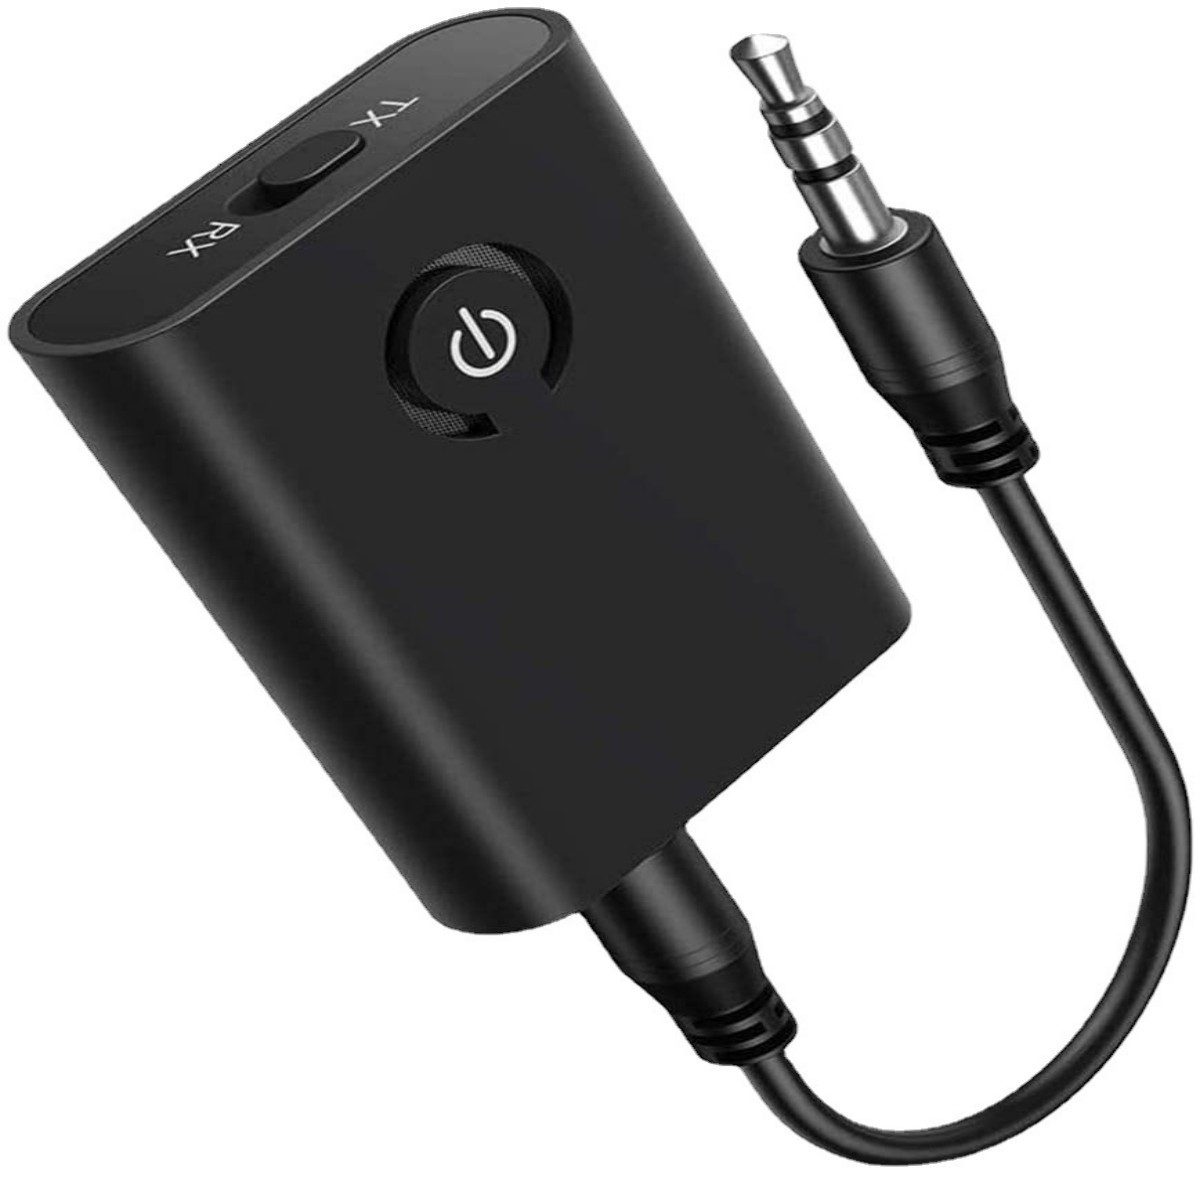 DOPWii 2 in 1 Bluetooth 5.0 Sender Empfänger Bluetooth-Adapter, Wireless Audio Transmitter Adapter, 3.5mm